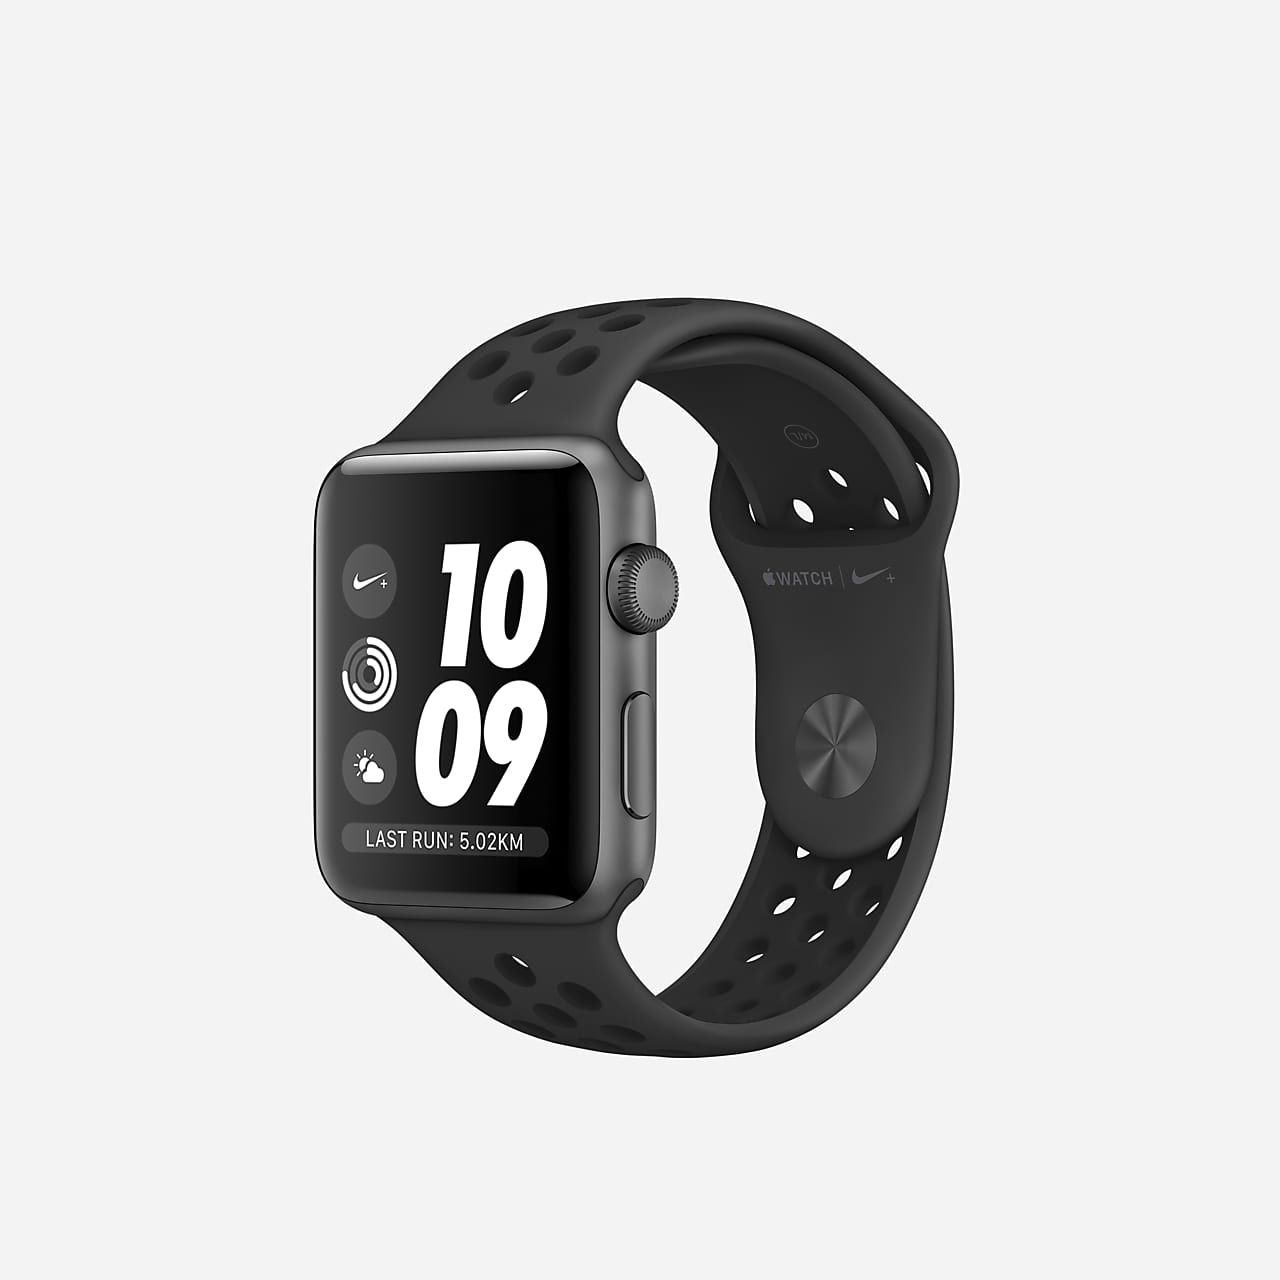 Apple Watch Nike+ GPS Series 3 (42mm) Open Box Running Watch